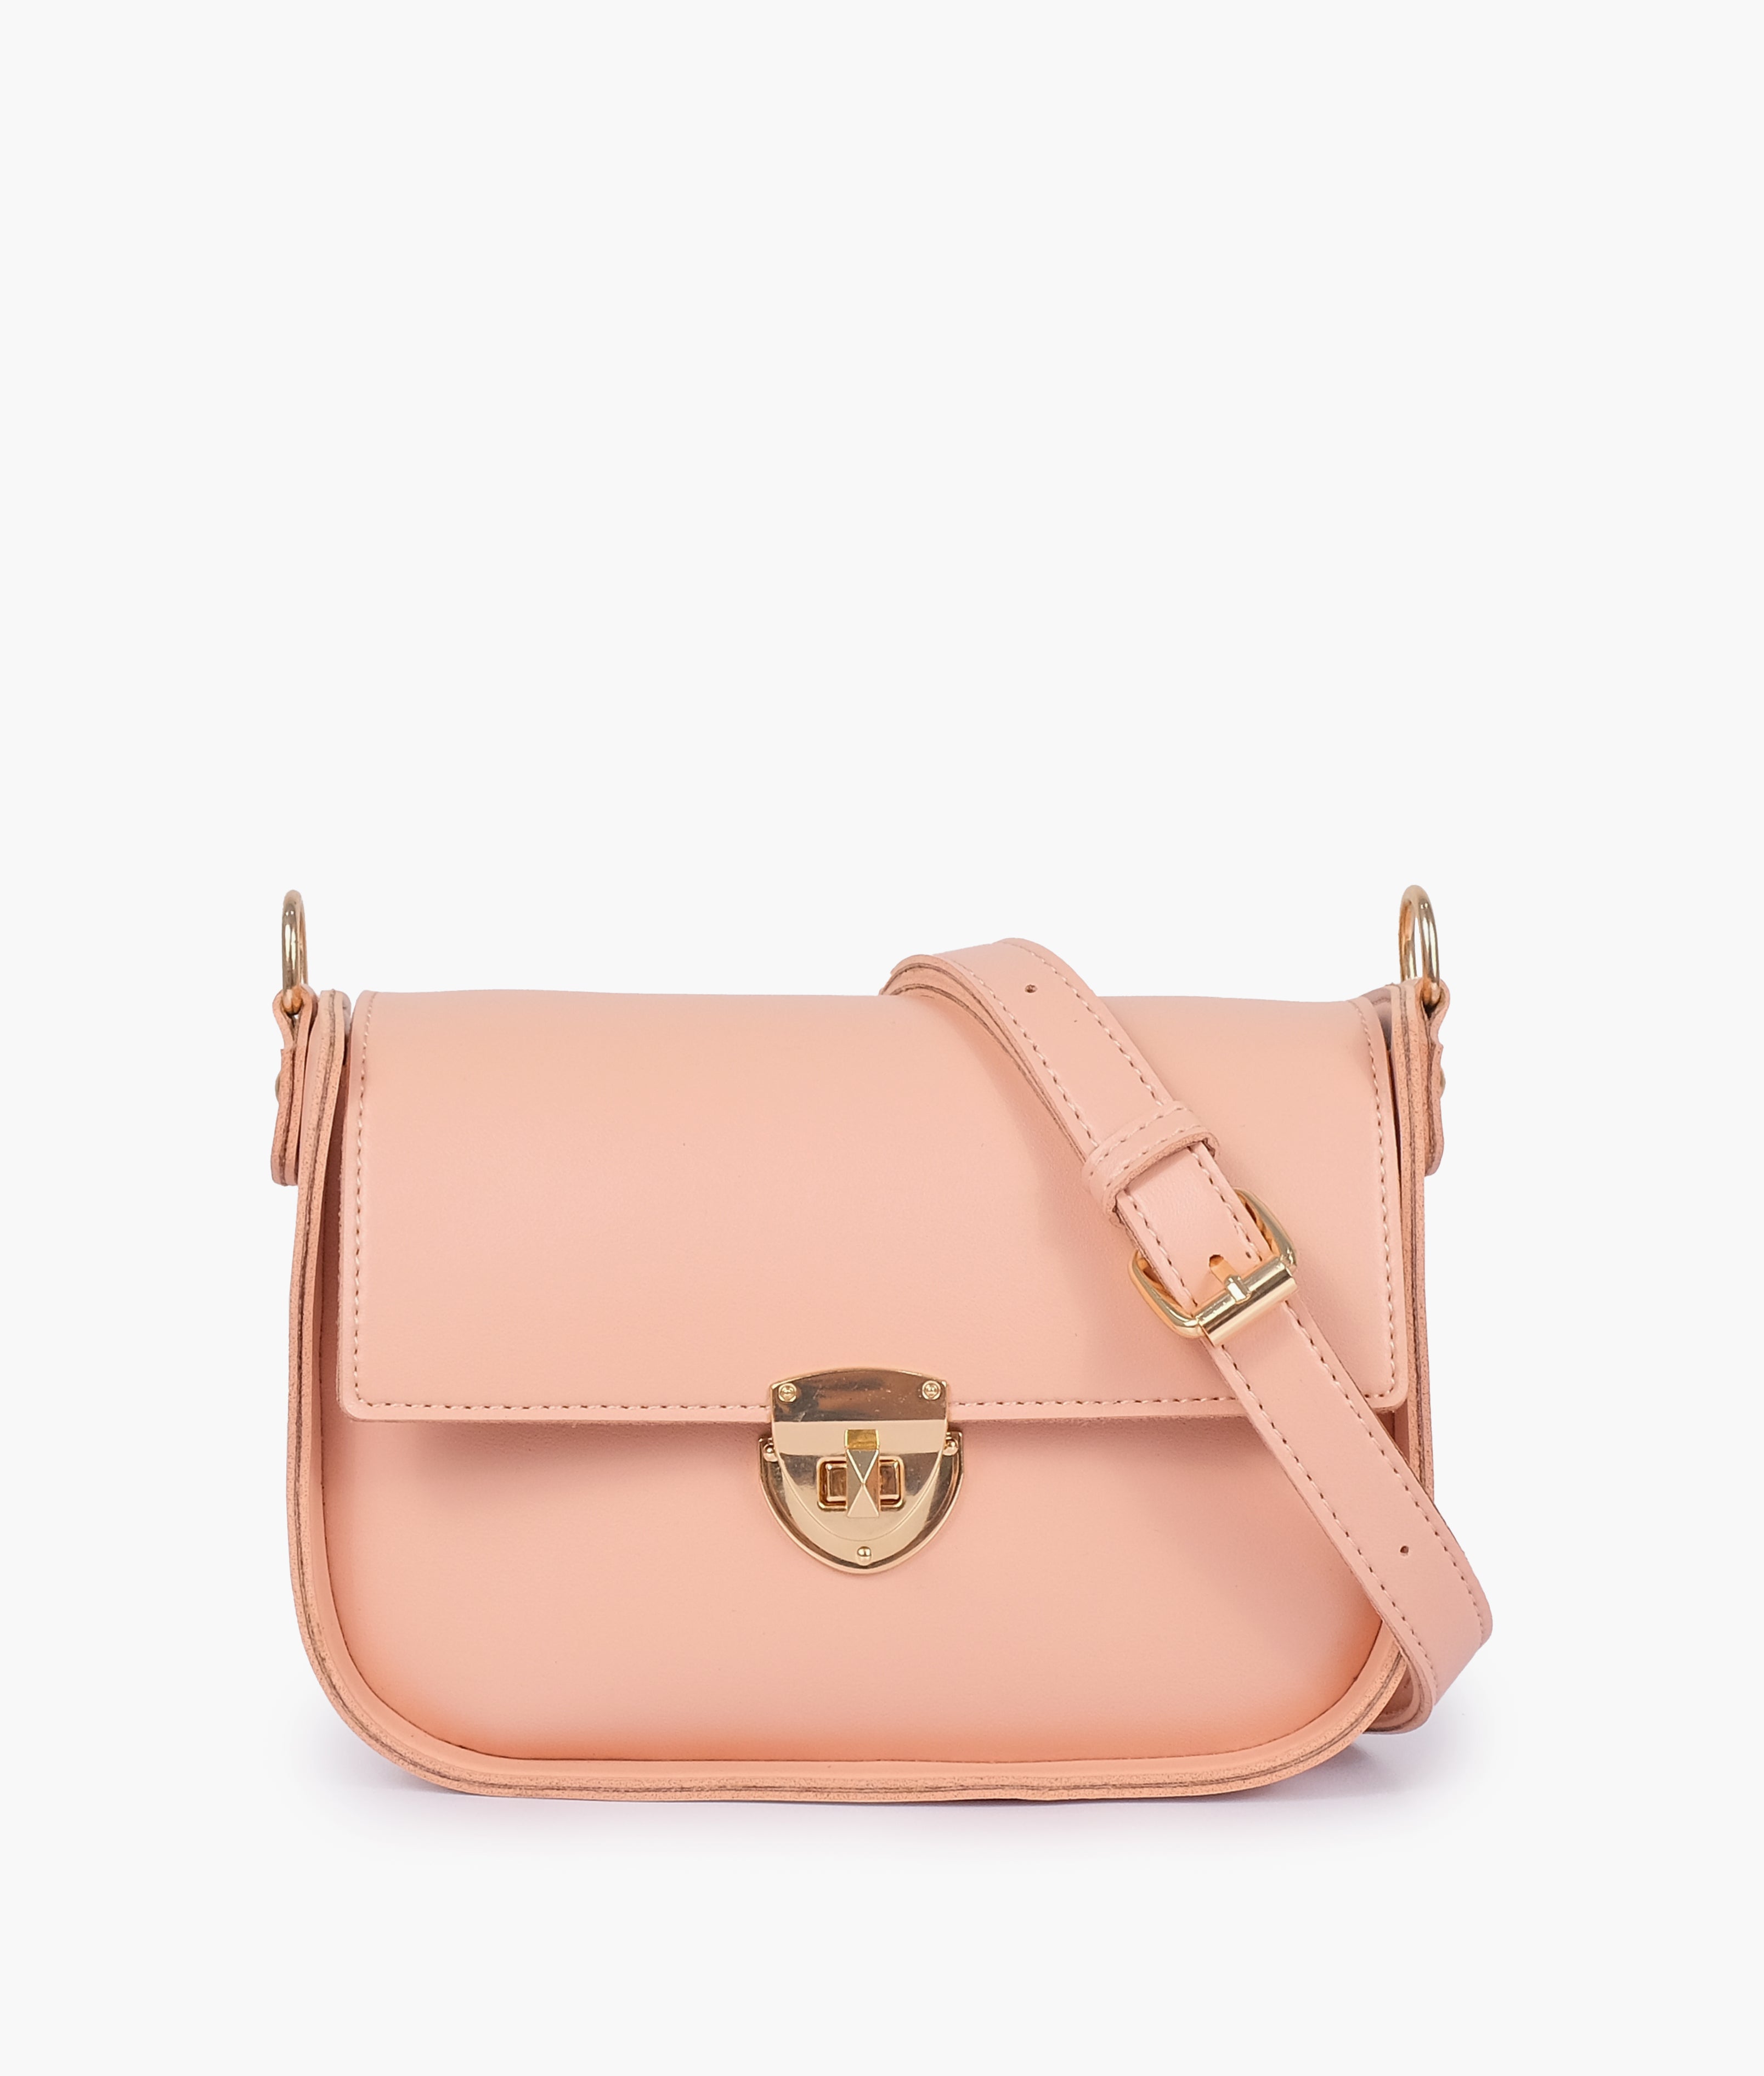 Peach saddle bag with twist lock